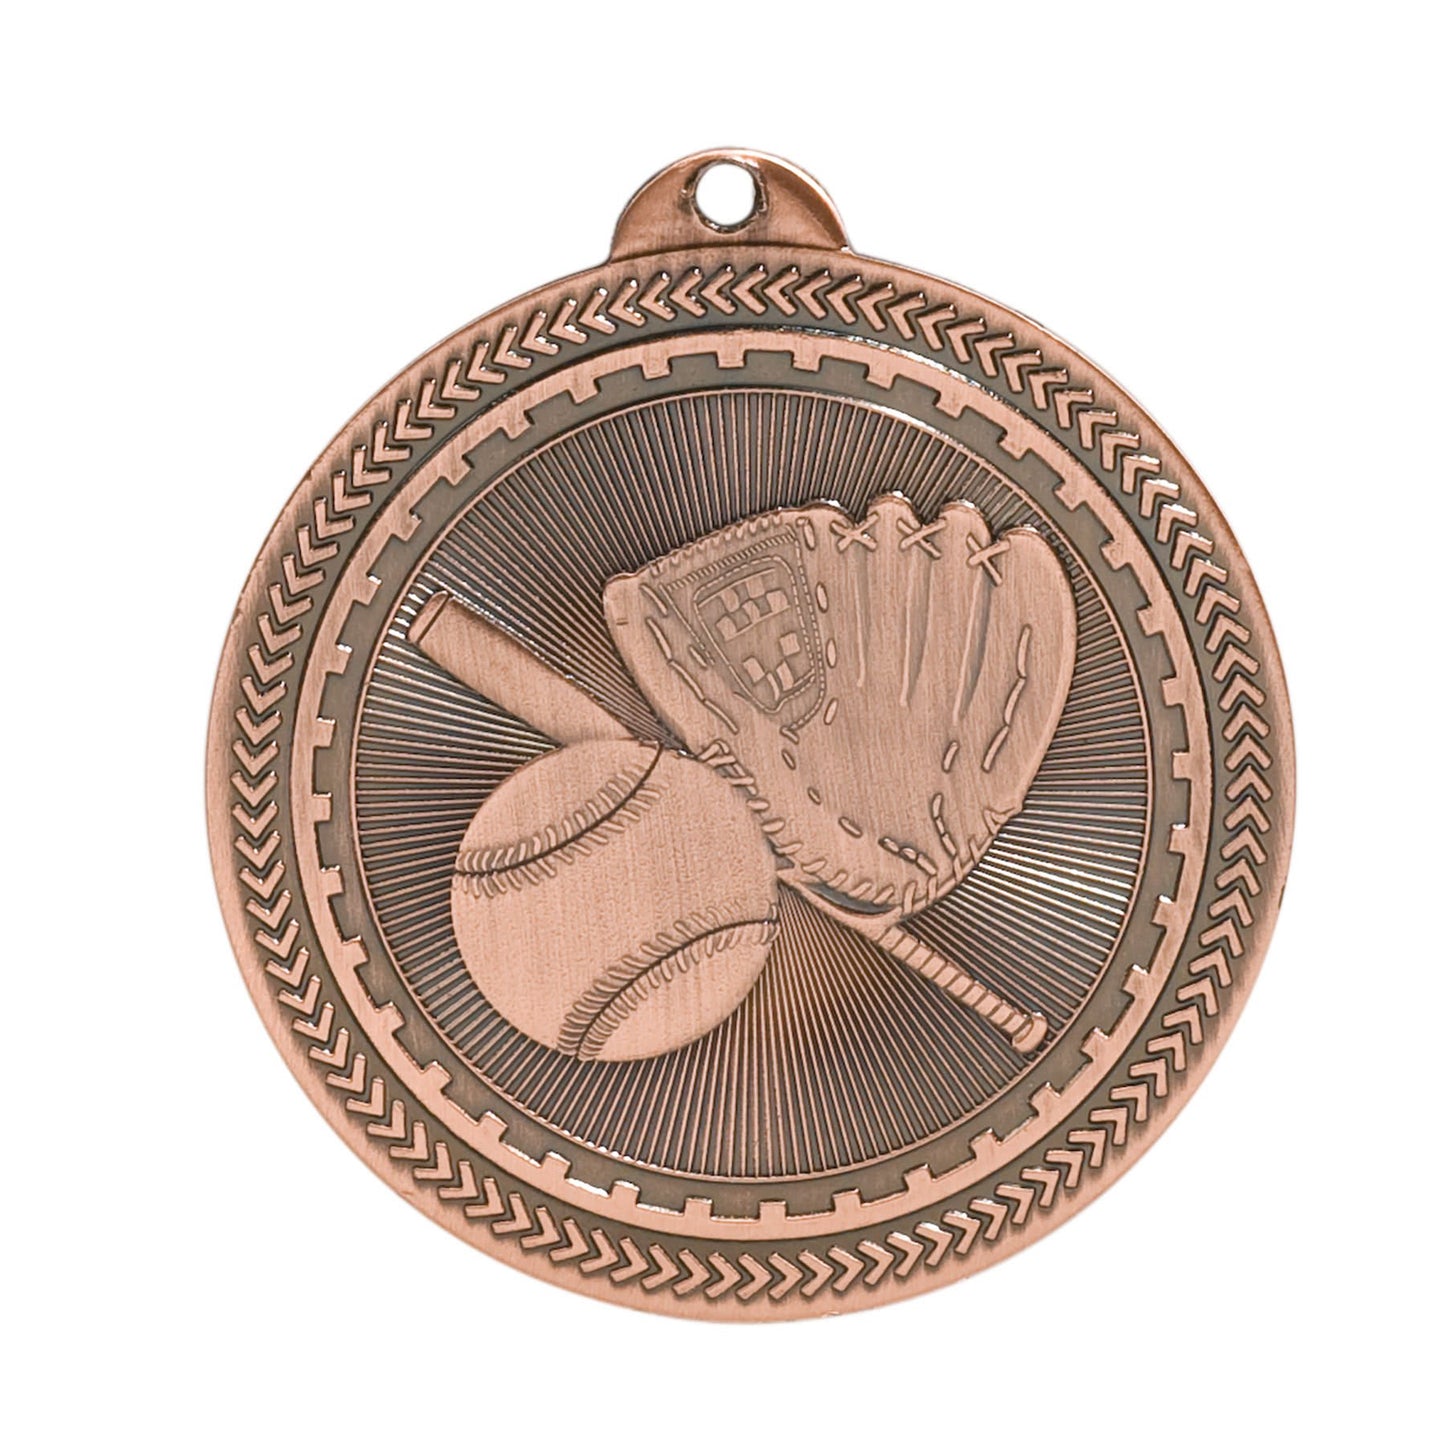 BriteLazer Baseball Medal